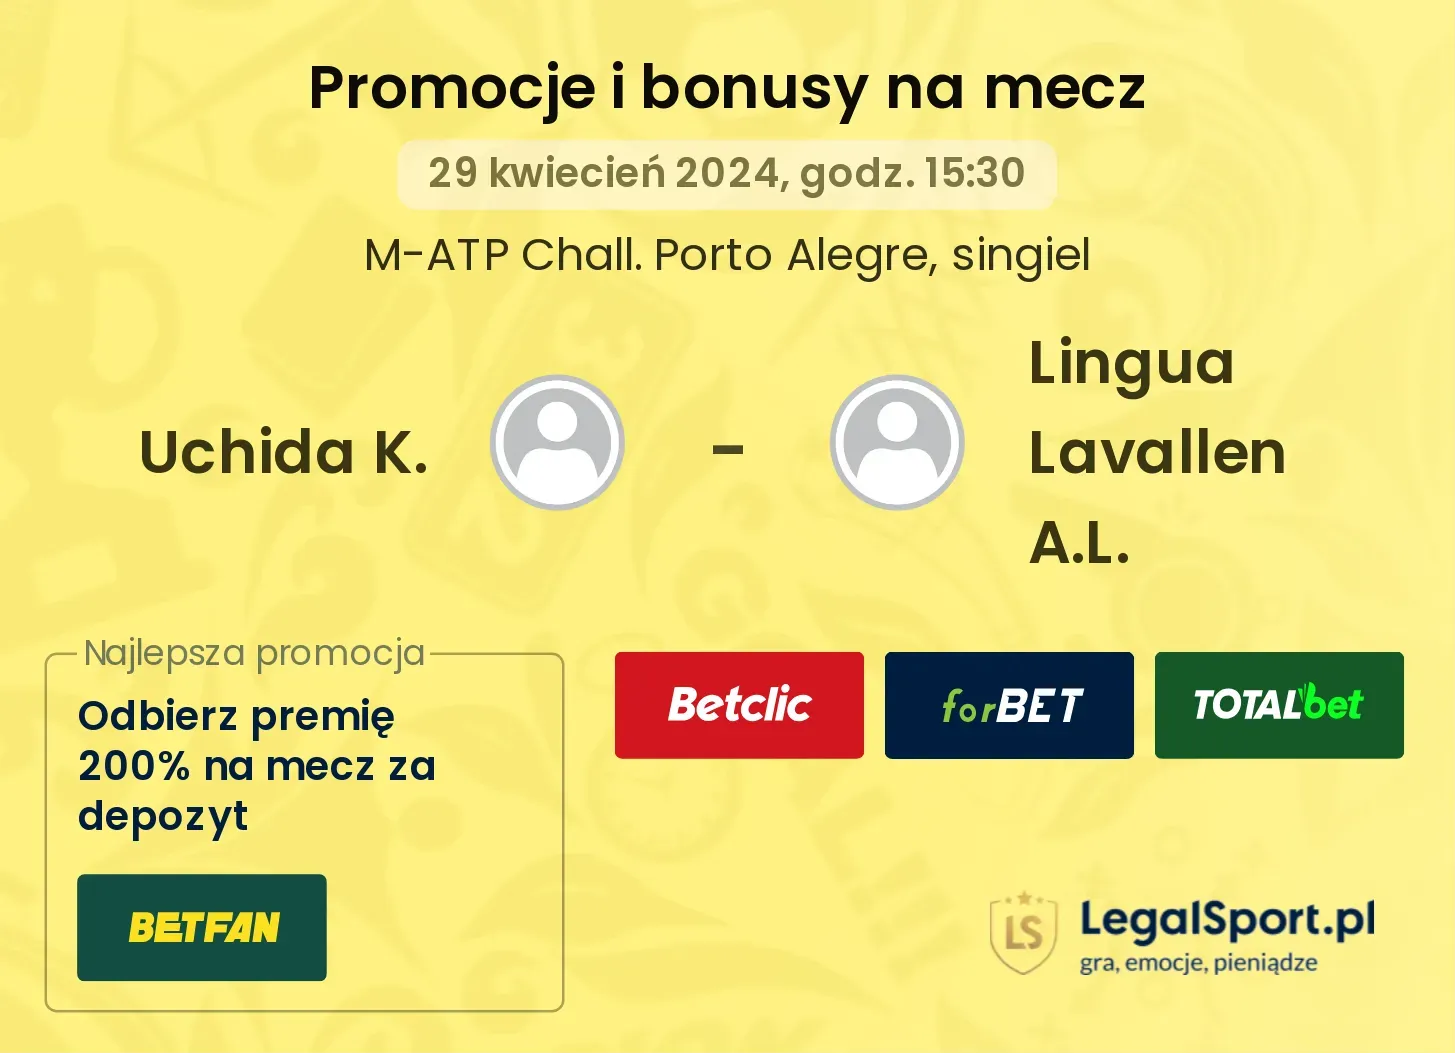 Uchida K. - Lingua Lavallen A.L. promocje bonusy na mecz